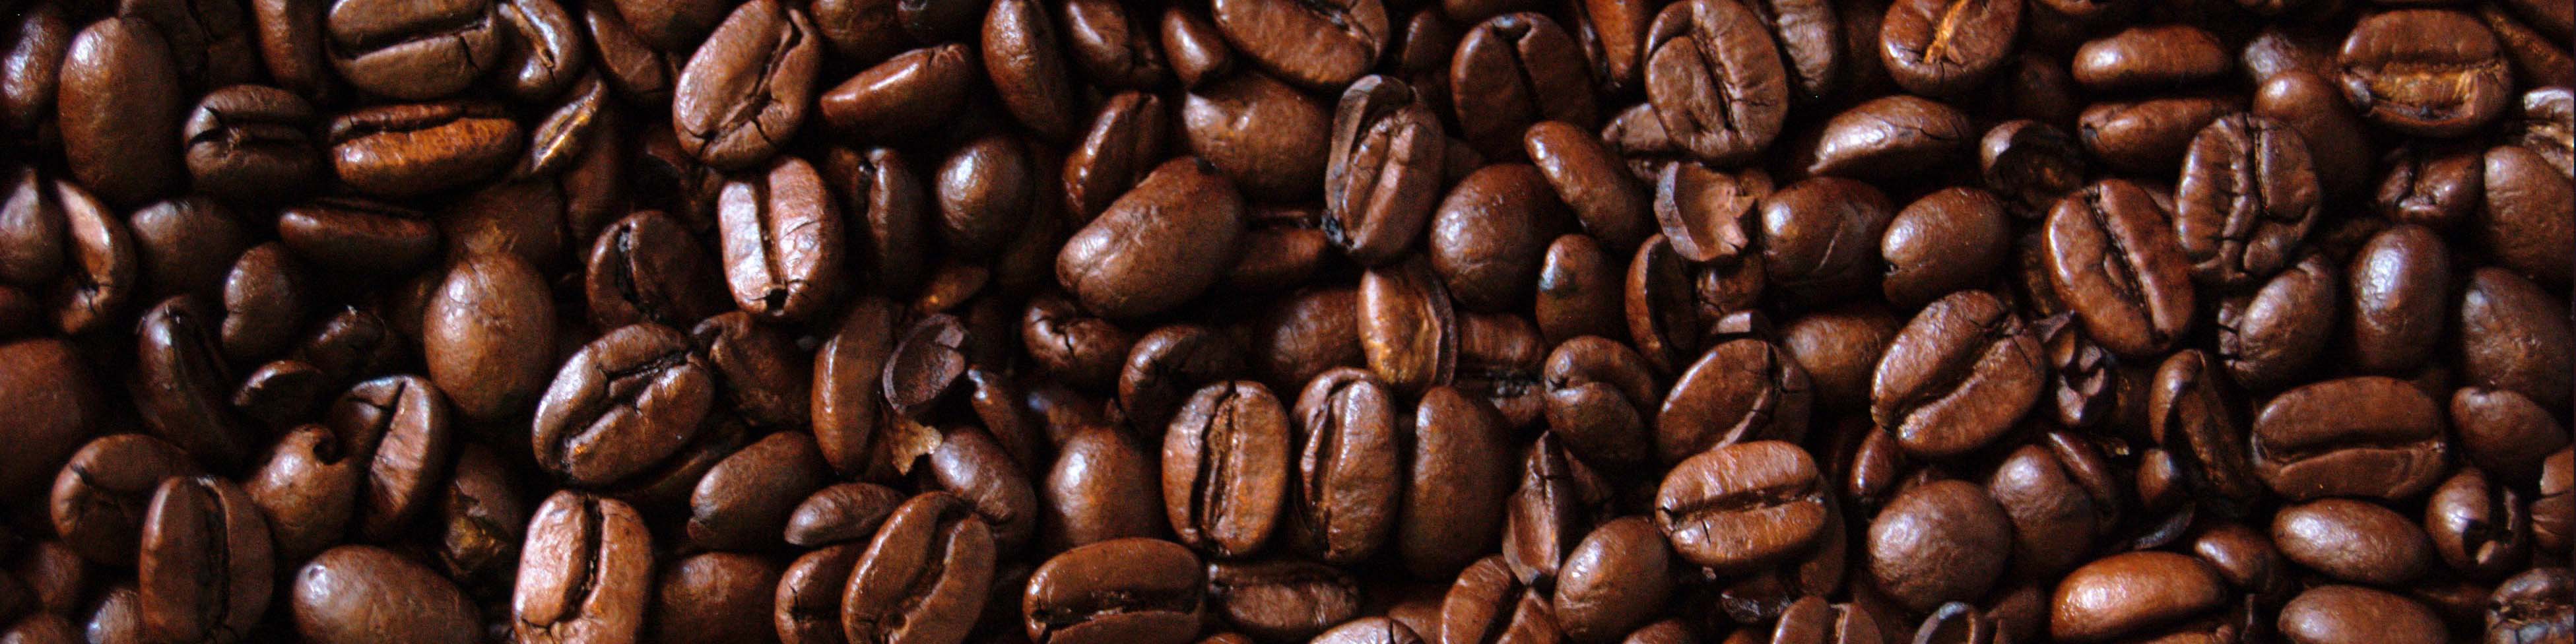 Coffee beans